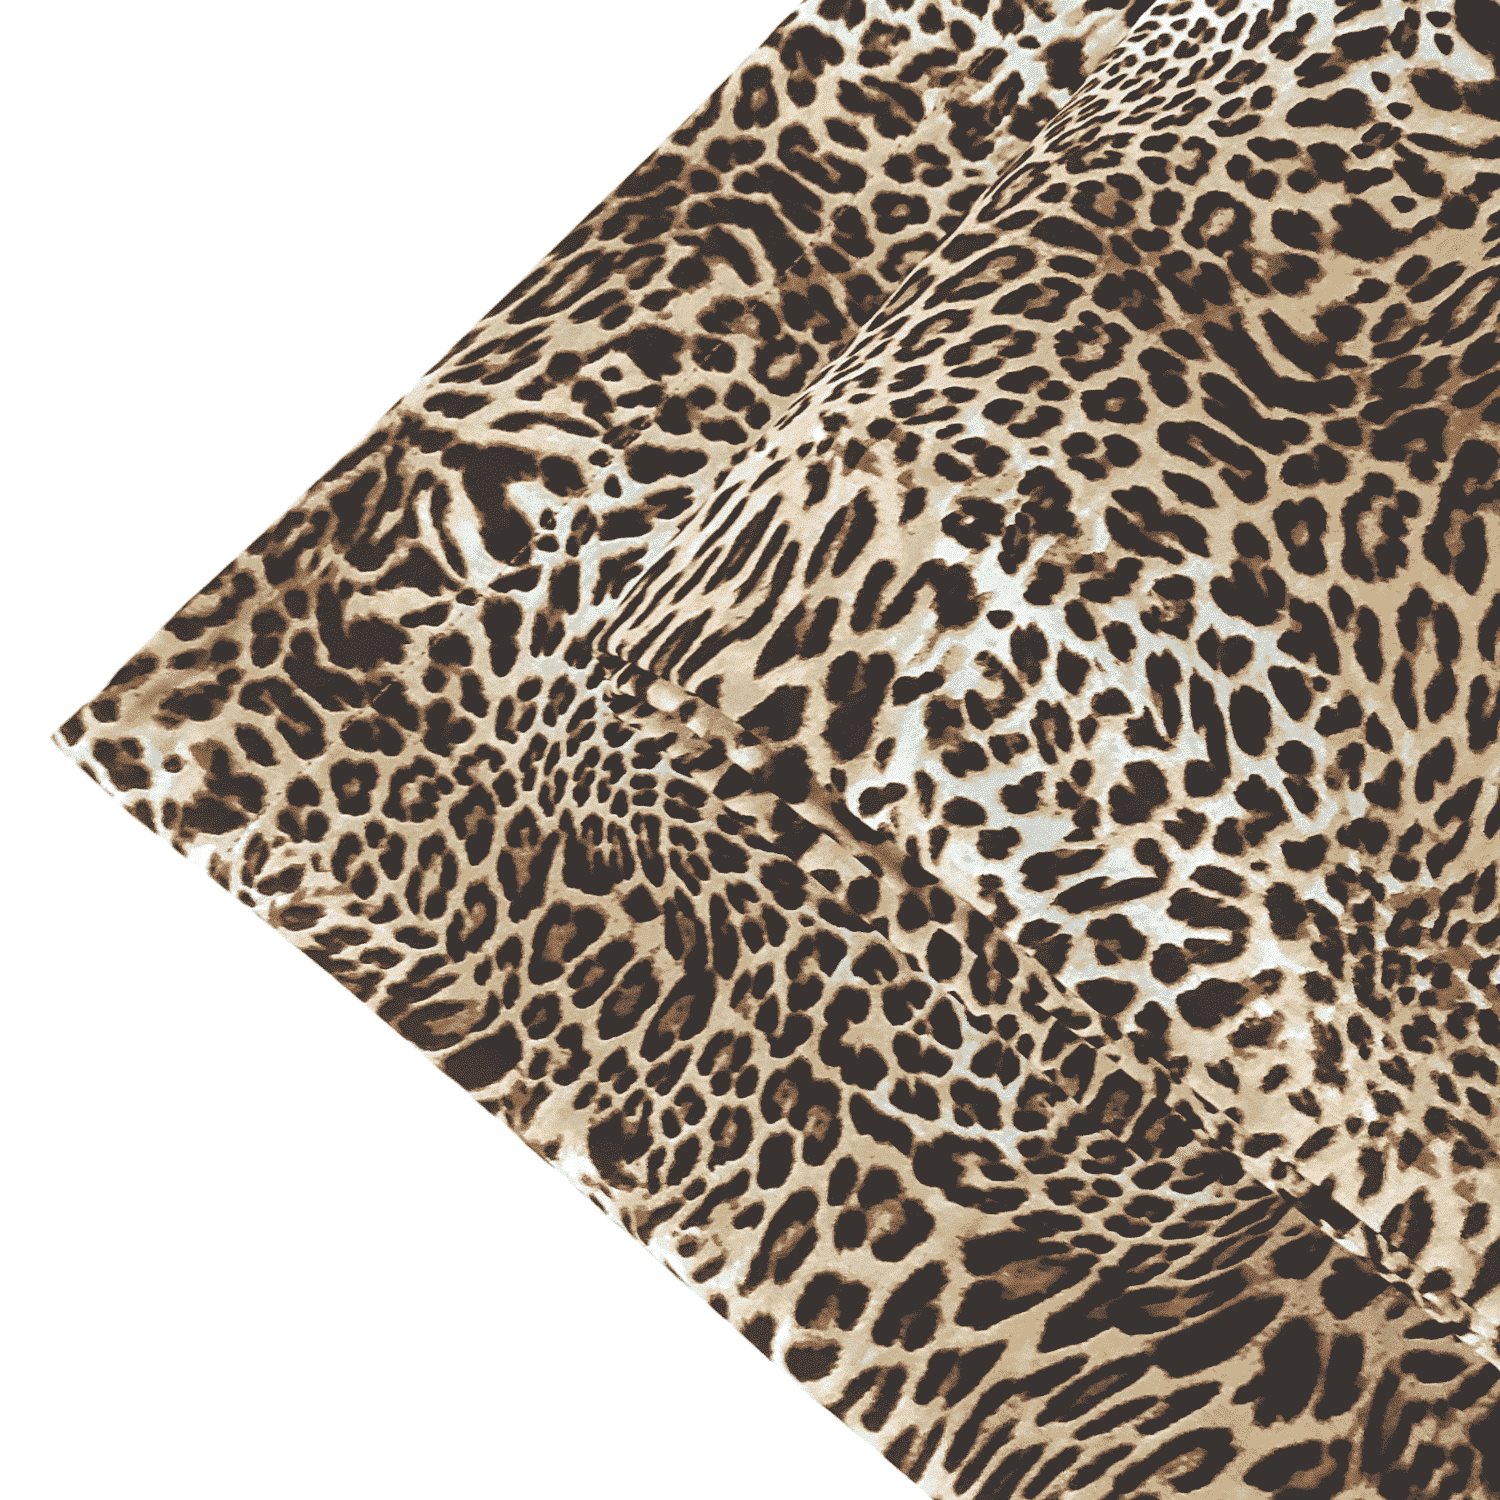 completo-lenzuola-leopardo-penelope-leopardato-animalier-beige-crema-panna-marrone-bianco-dettaglio